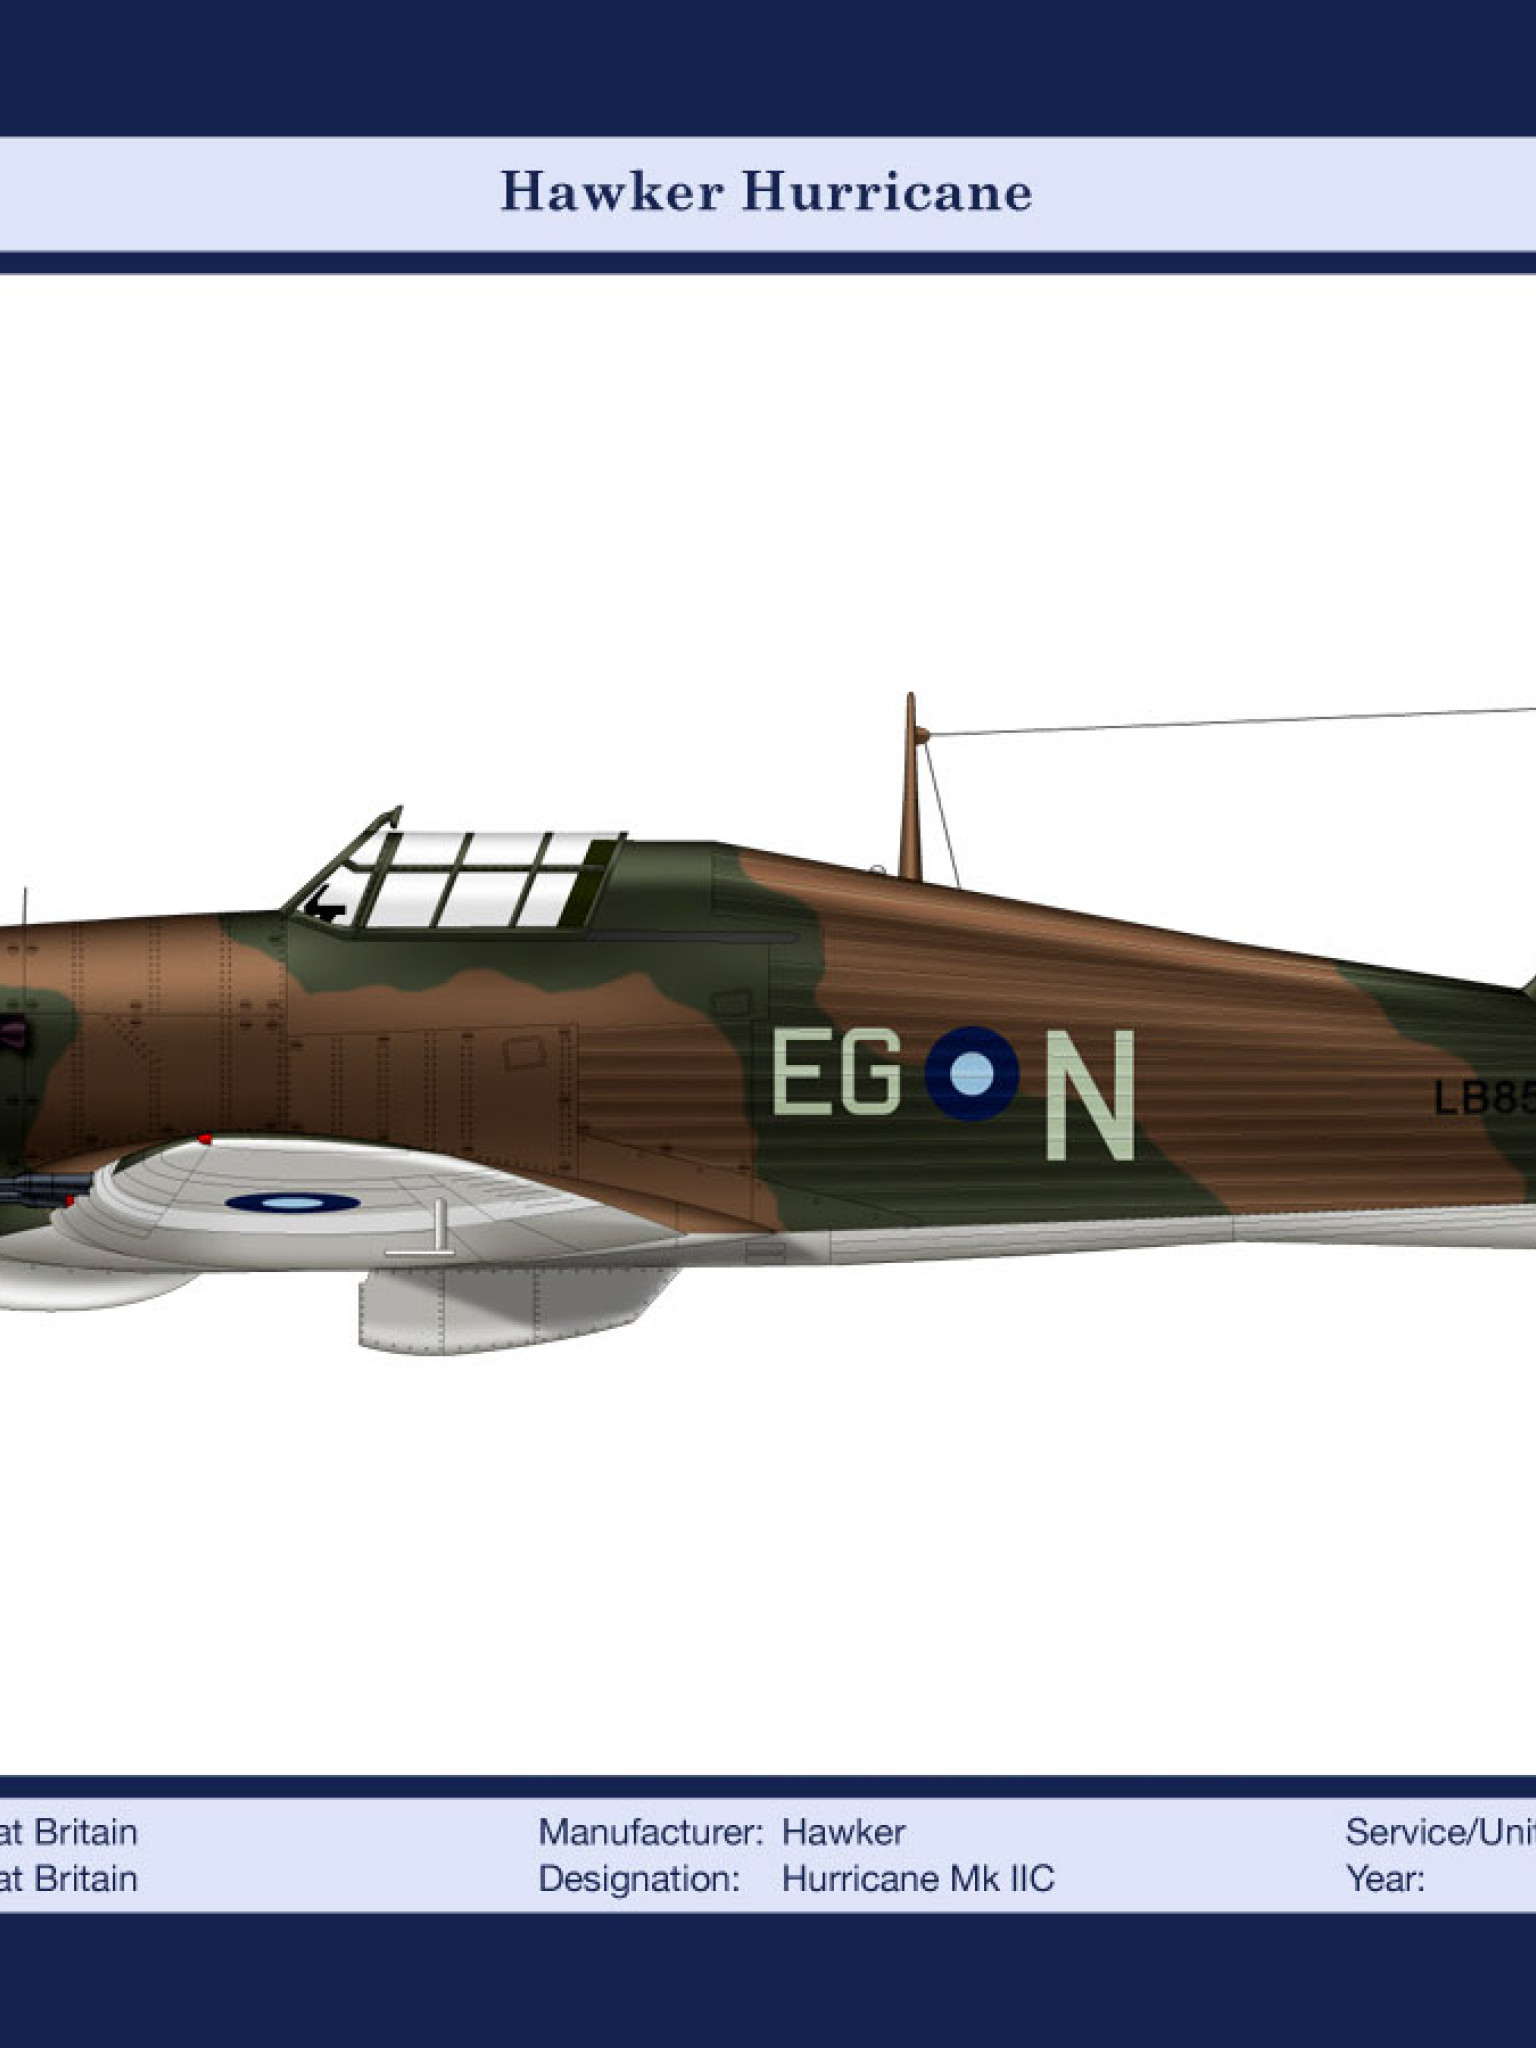 modele-samolotow (89).jpg